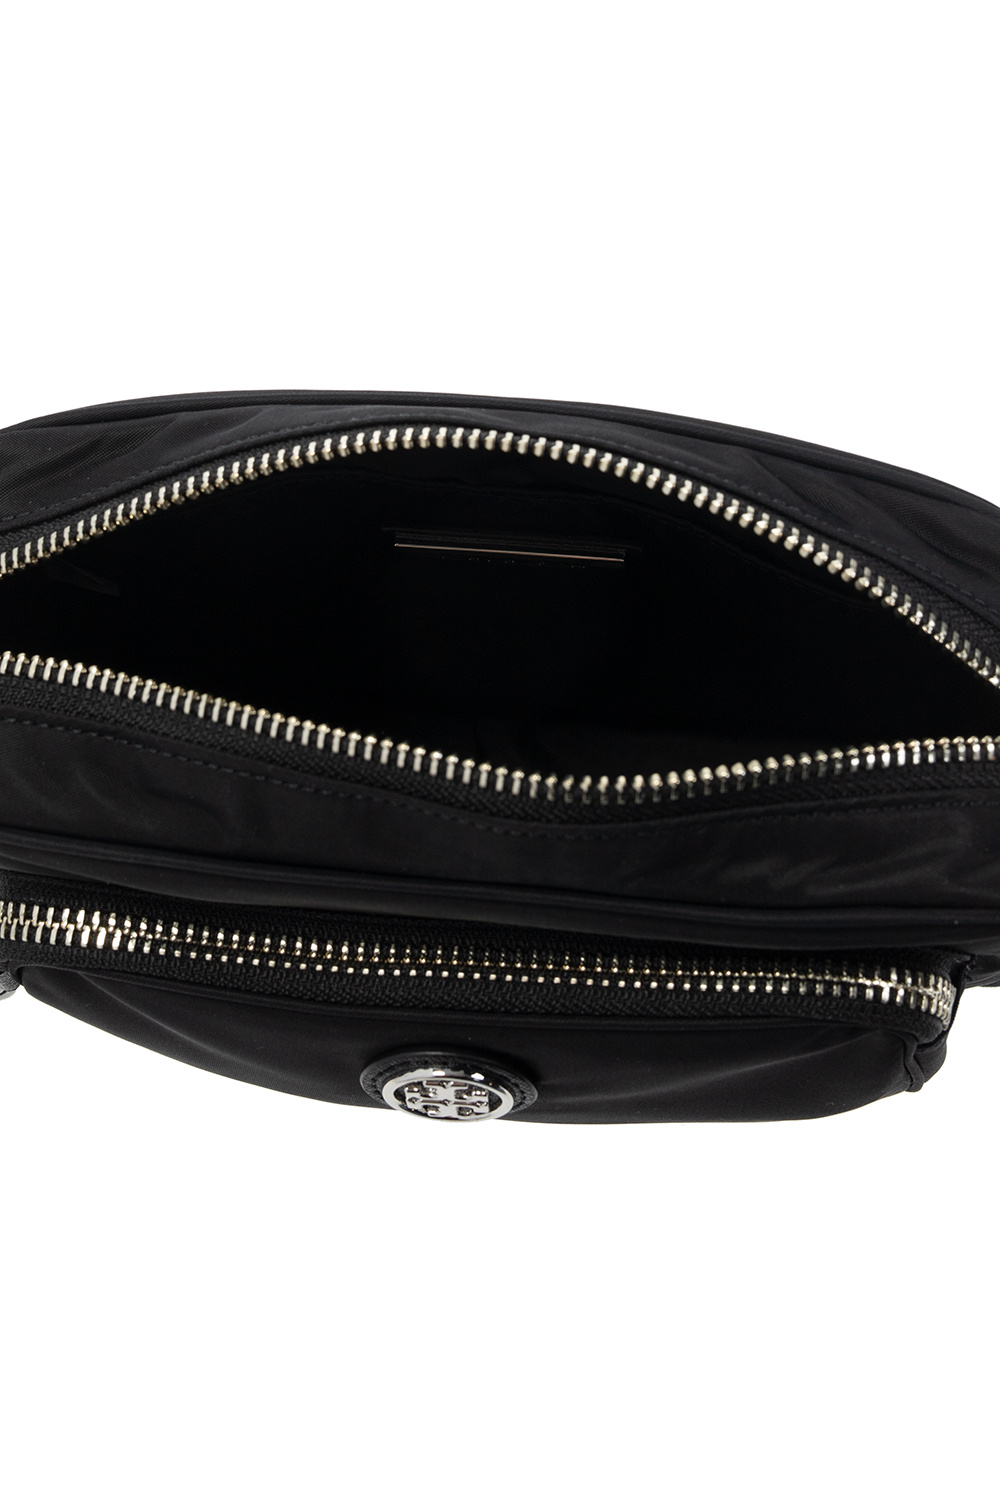 Black 'Virginia Mini' Nylon shoulder bag Tory Burch - Vitkac Canada